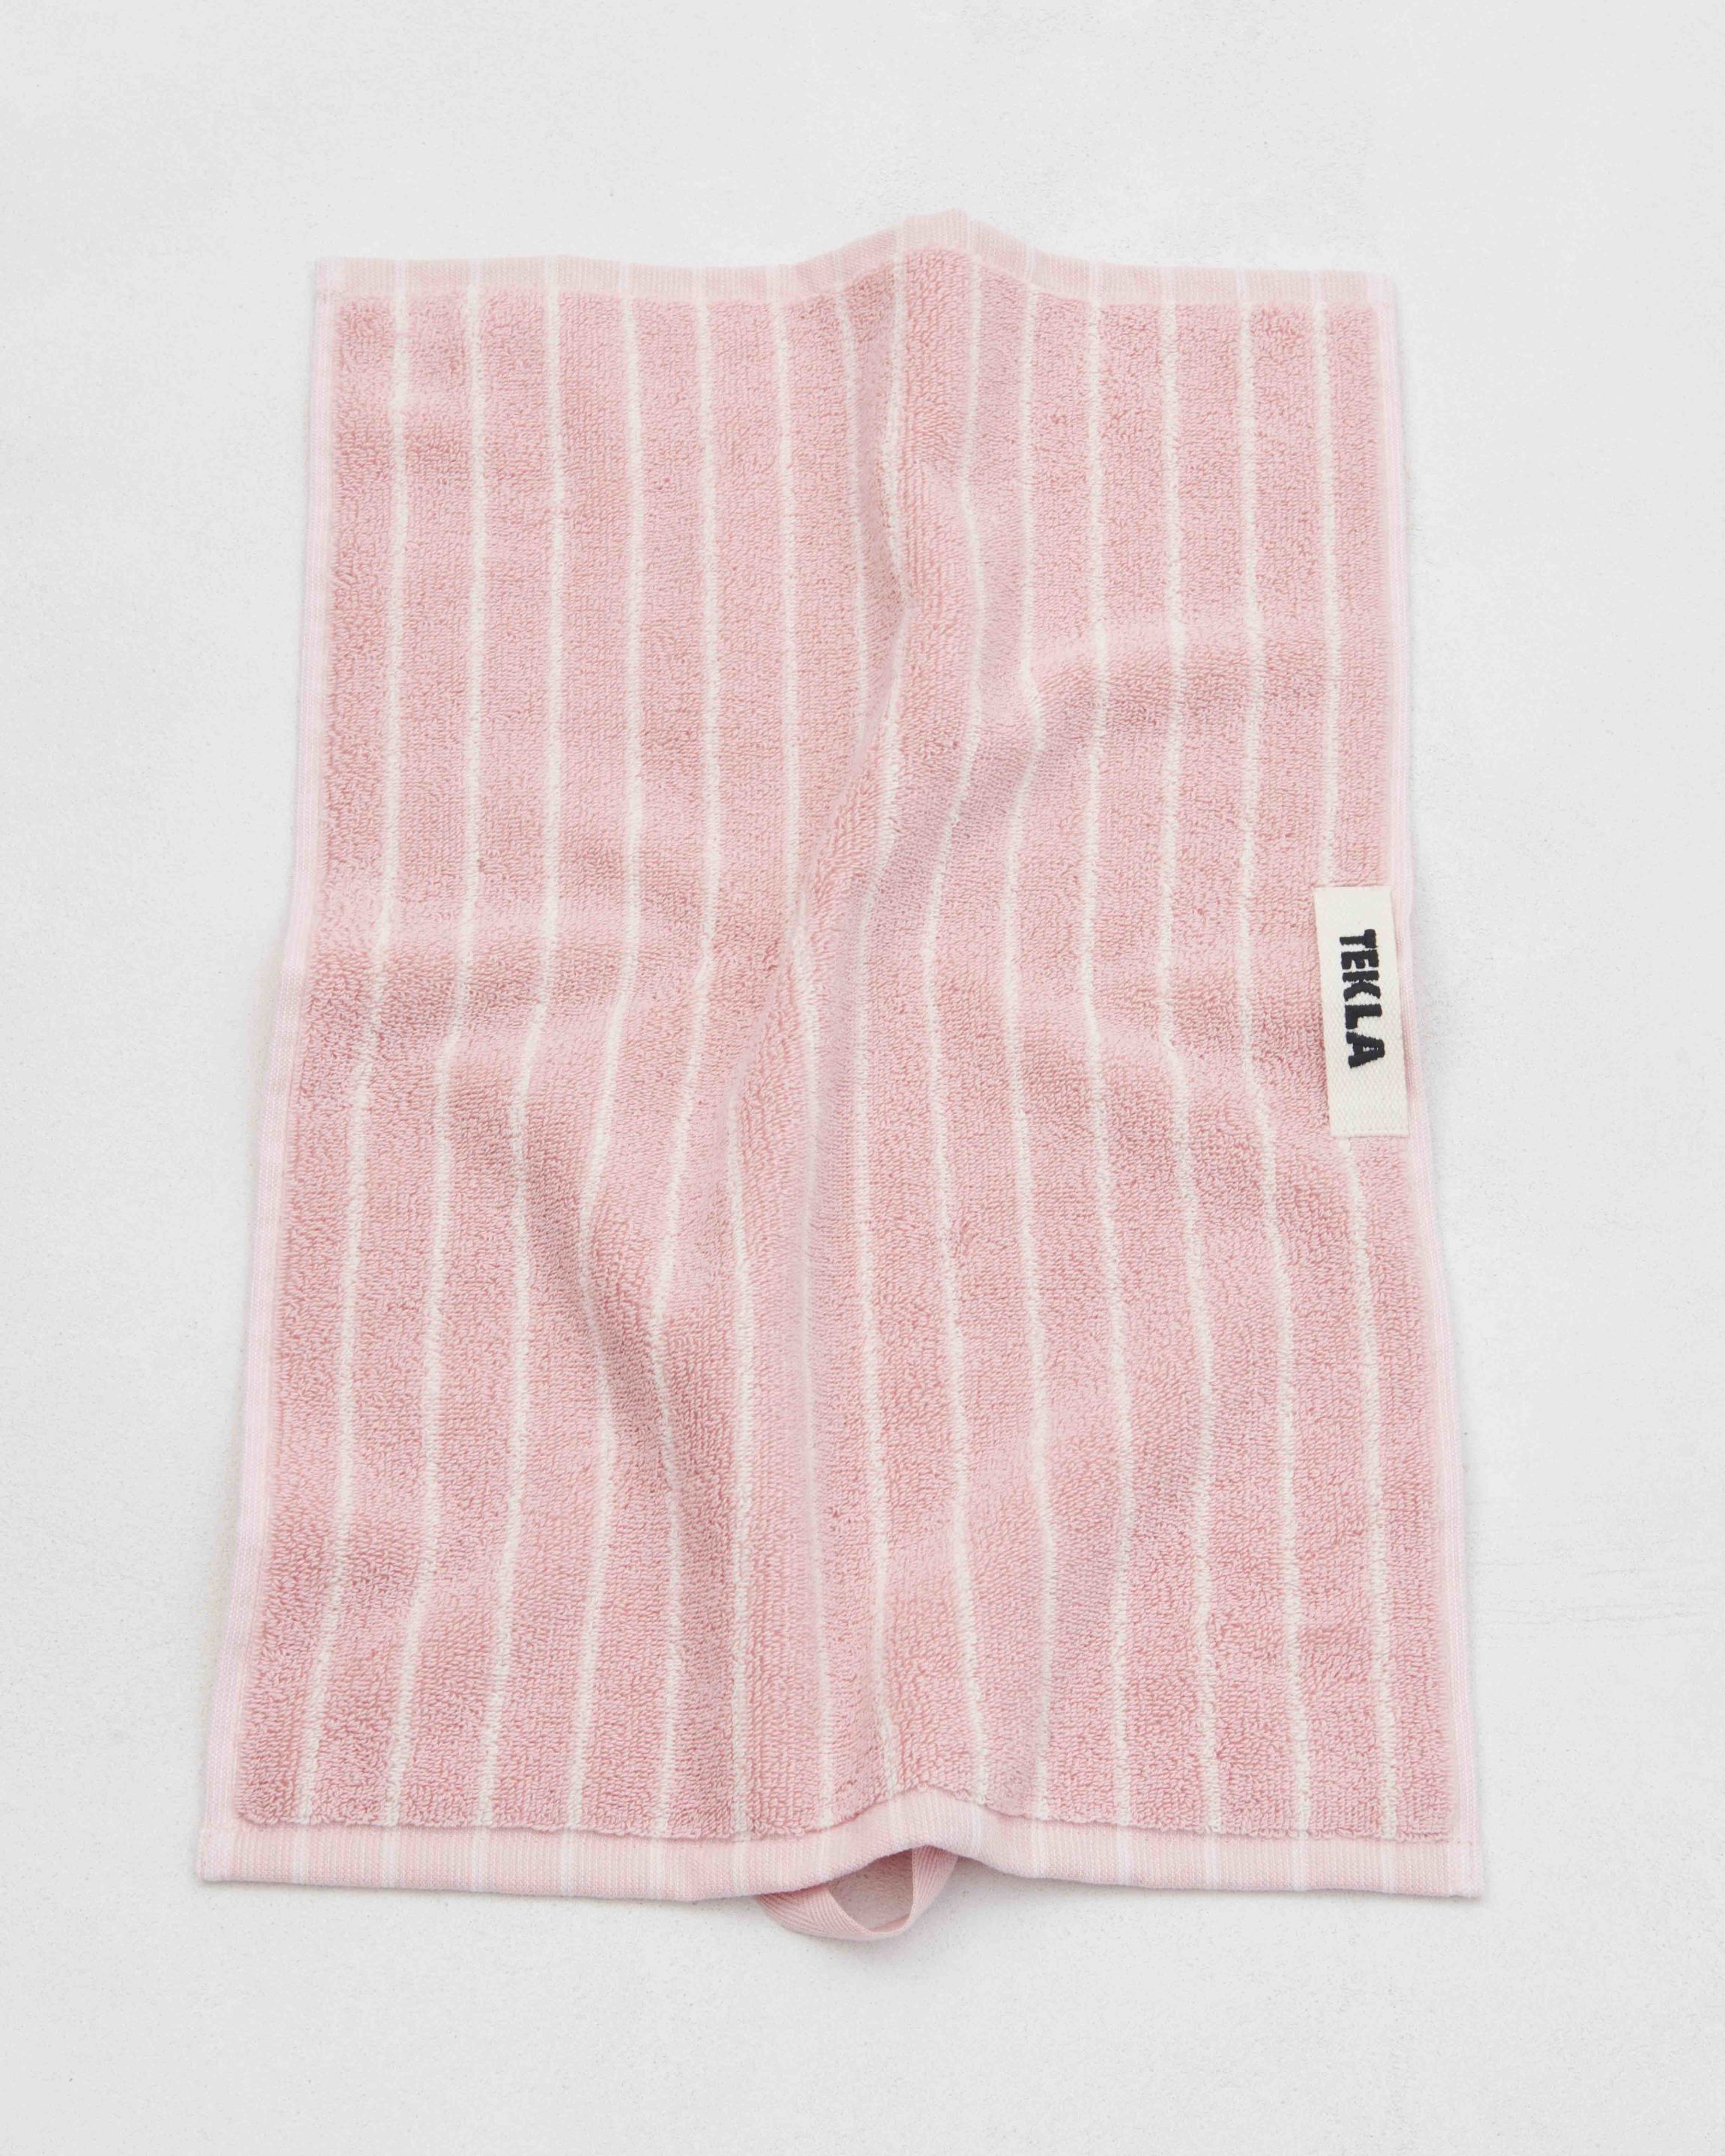 tekla towels shadedpinkstripes 4